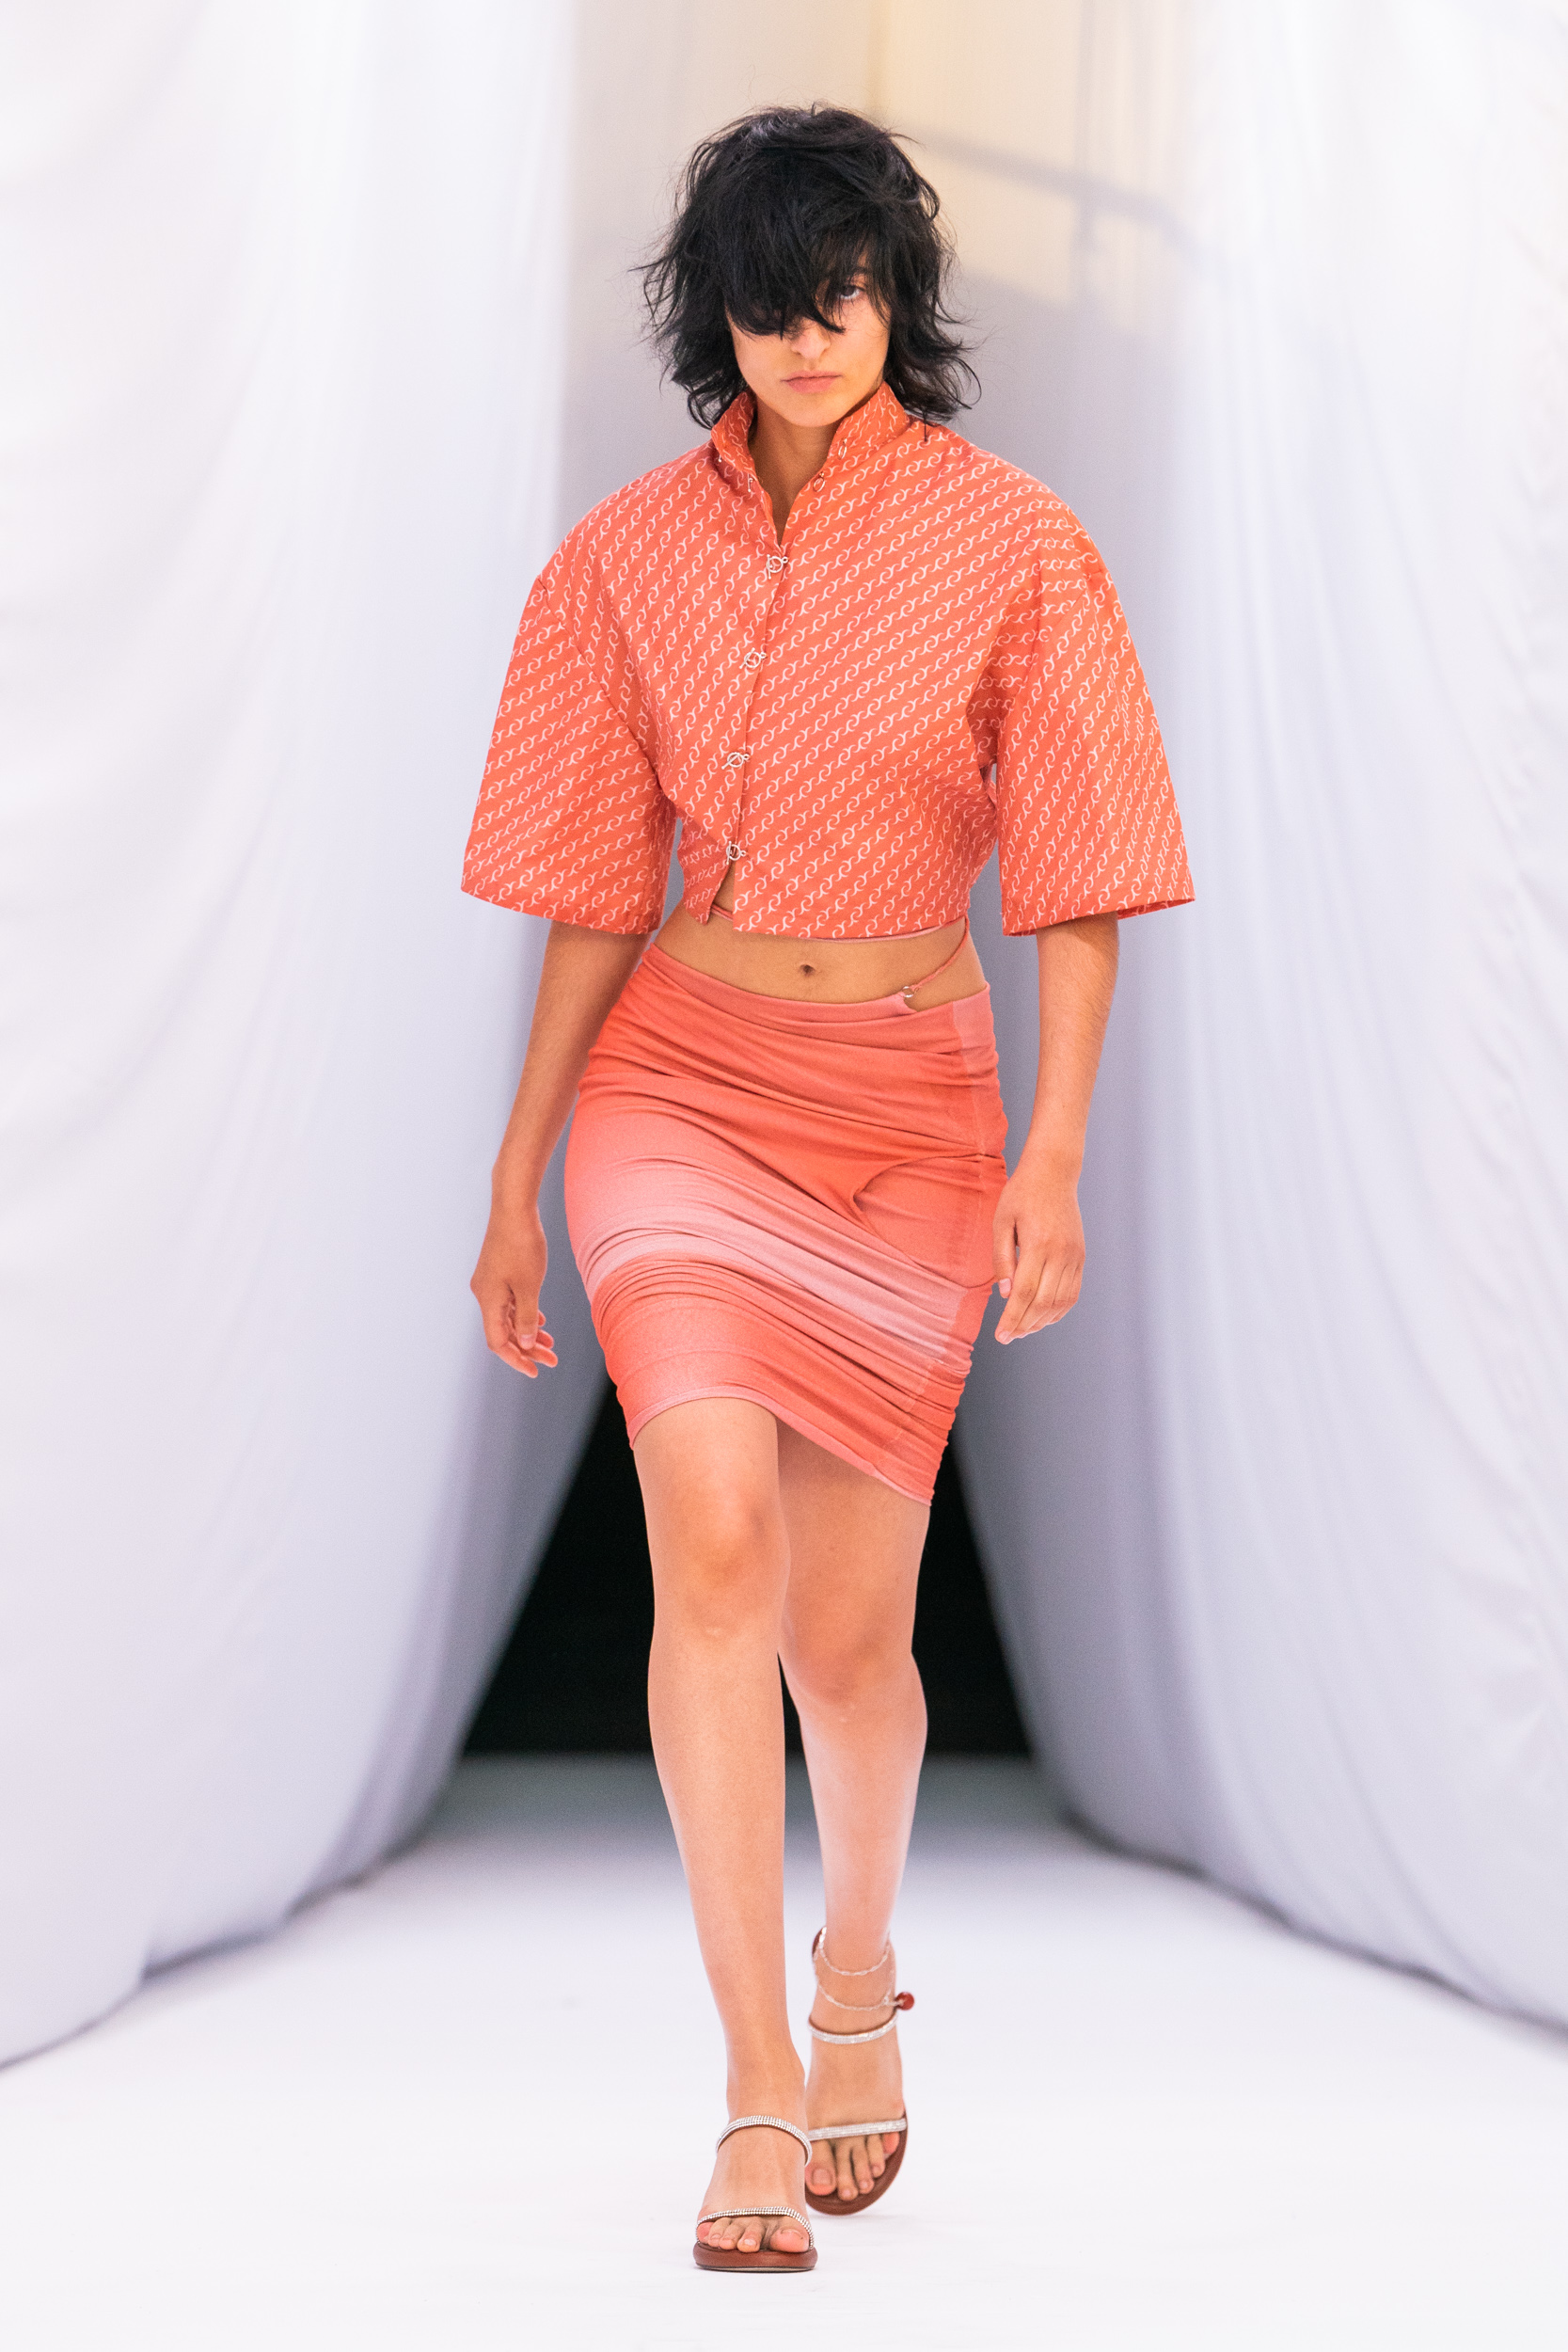 Jade Cropper Spring 2023 Fashion Show 